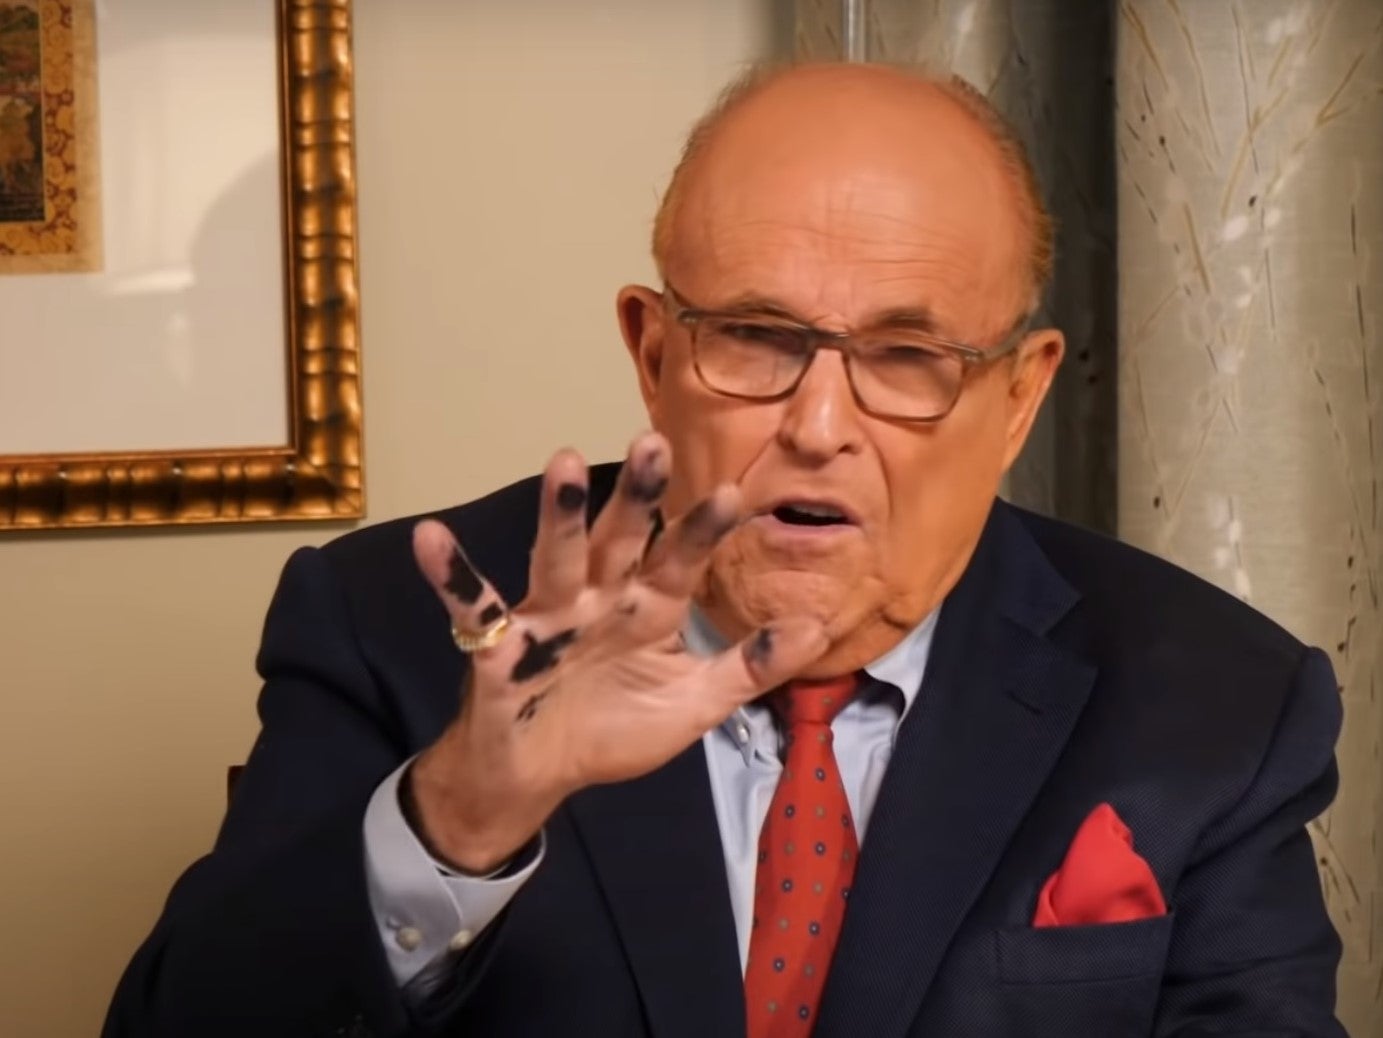 Former New York mayor Rudy Giuliani has more than 500,000 subscribers on YouTube